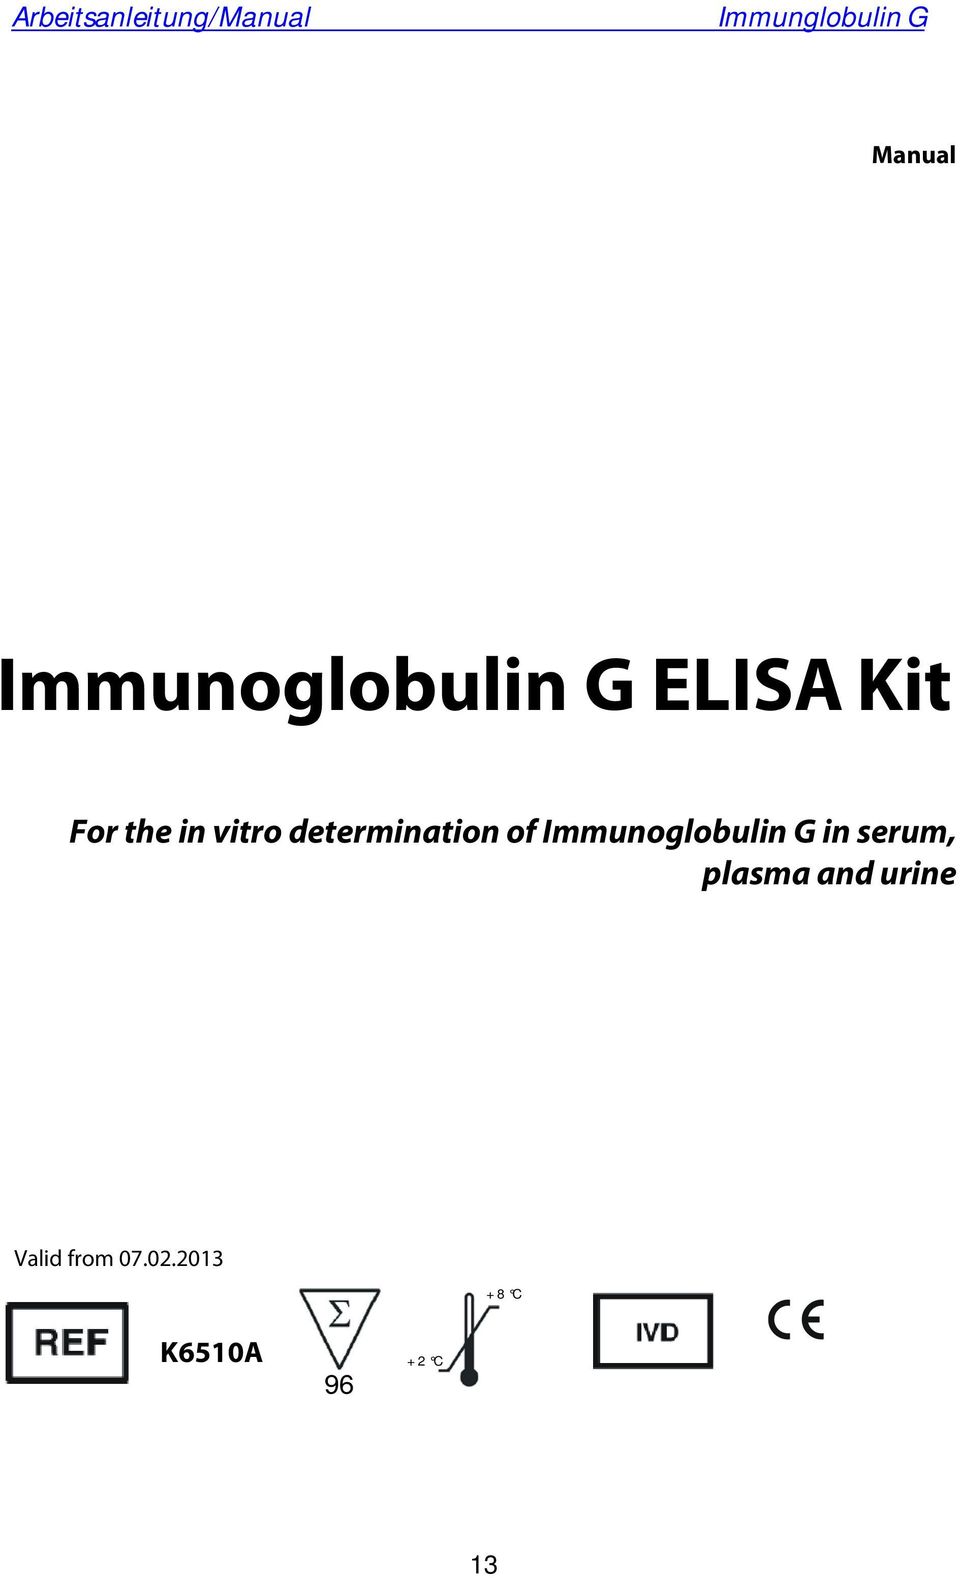 Immunoglobulin G in serum, plasma and